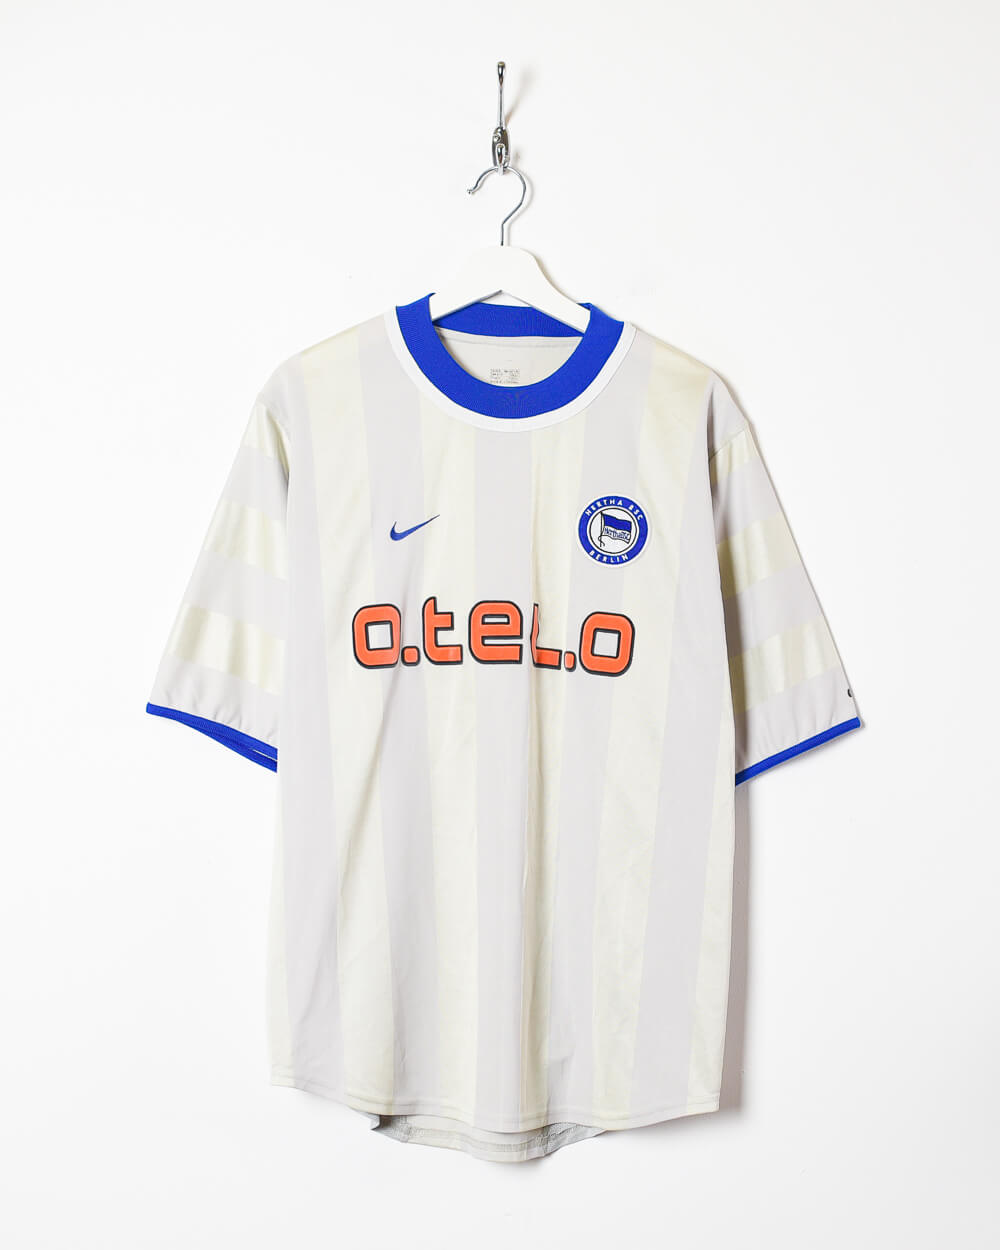 White Nike Hertha Berlin 2000/01 Away Football Shirt - Medium